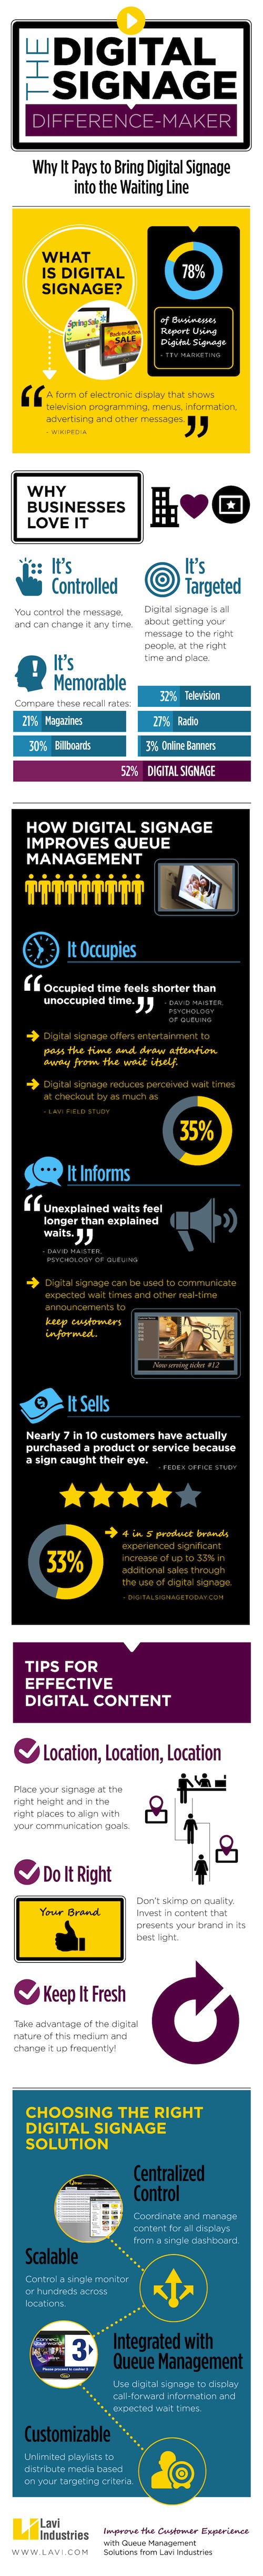 Digital Signage Difference-Maker